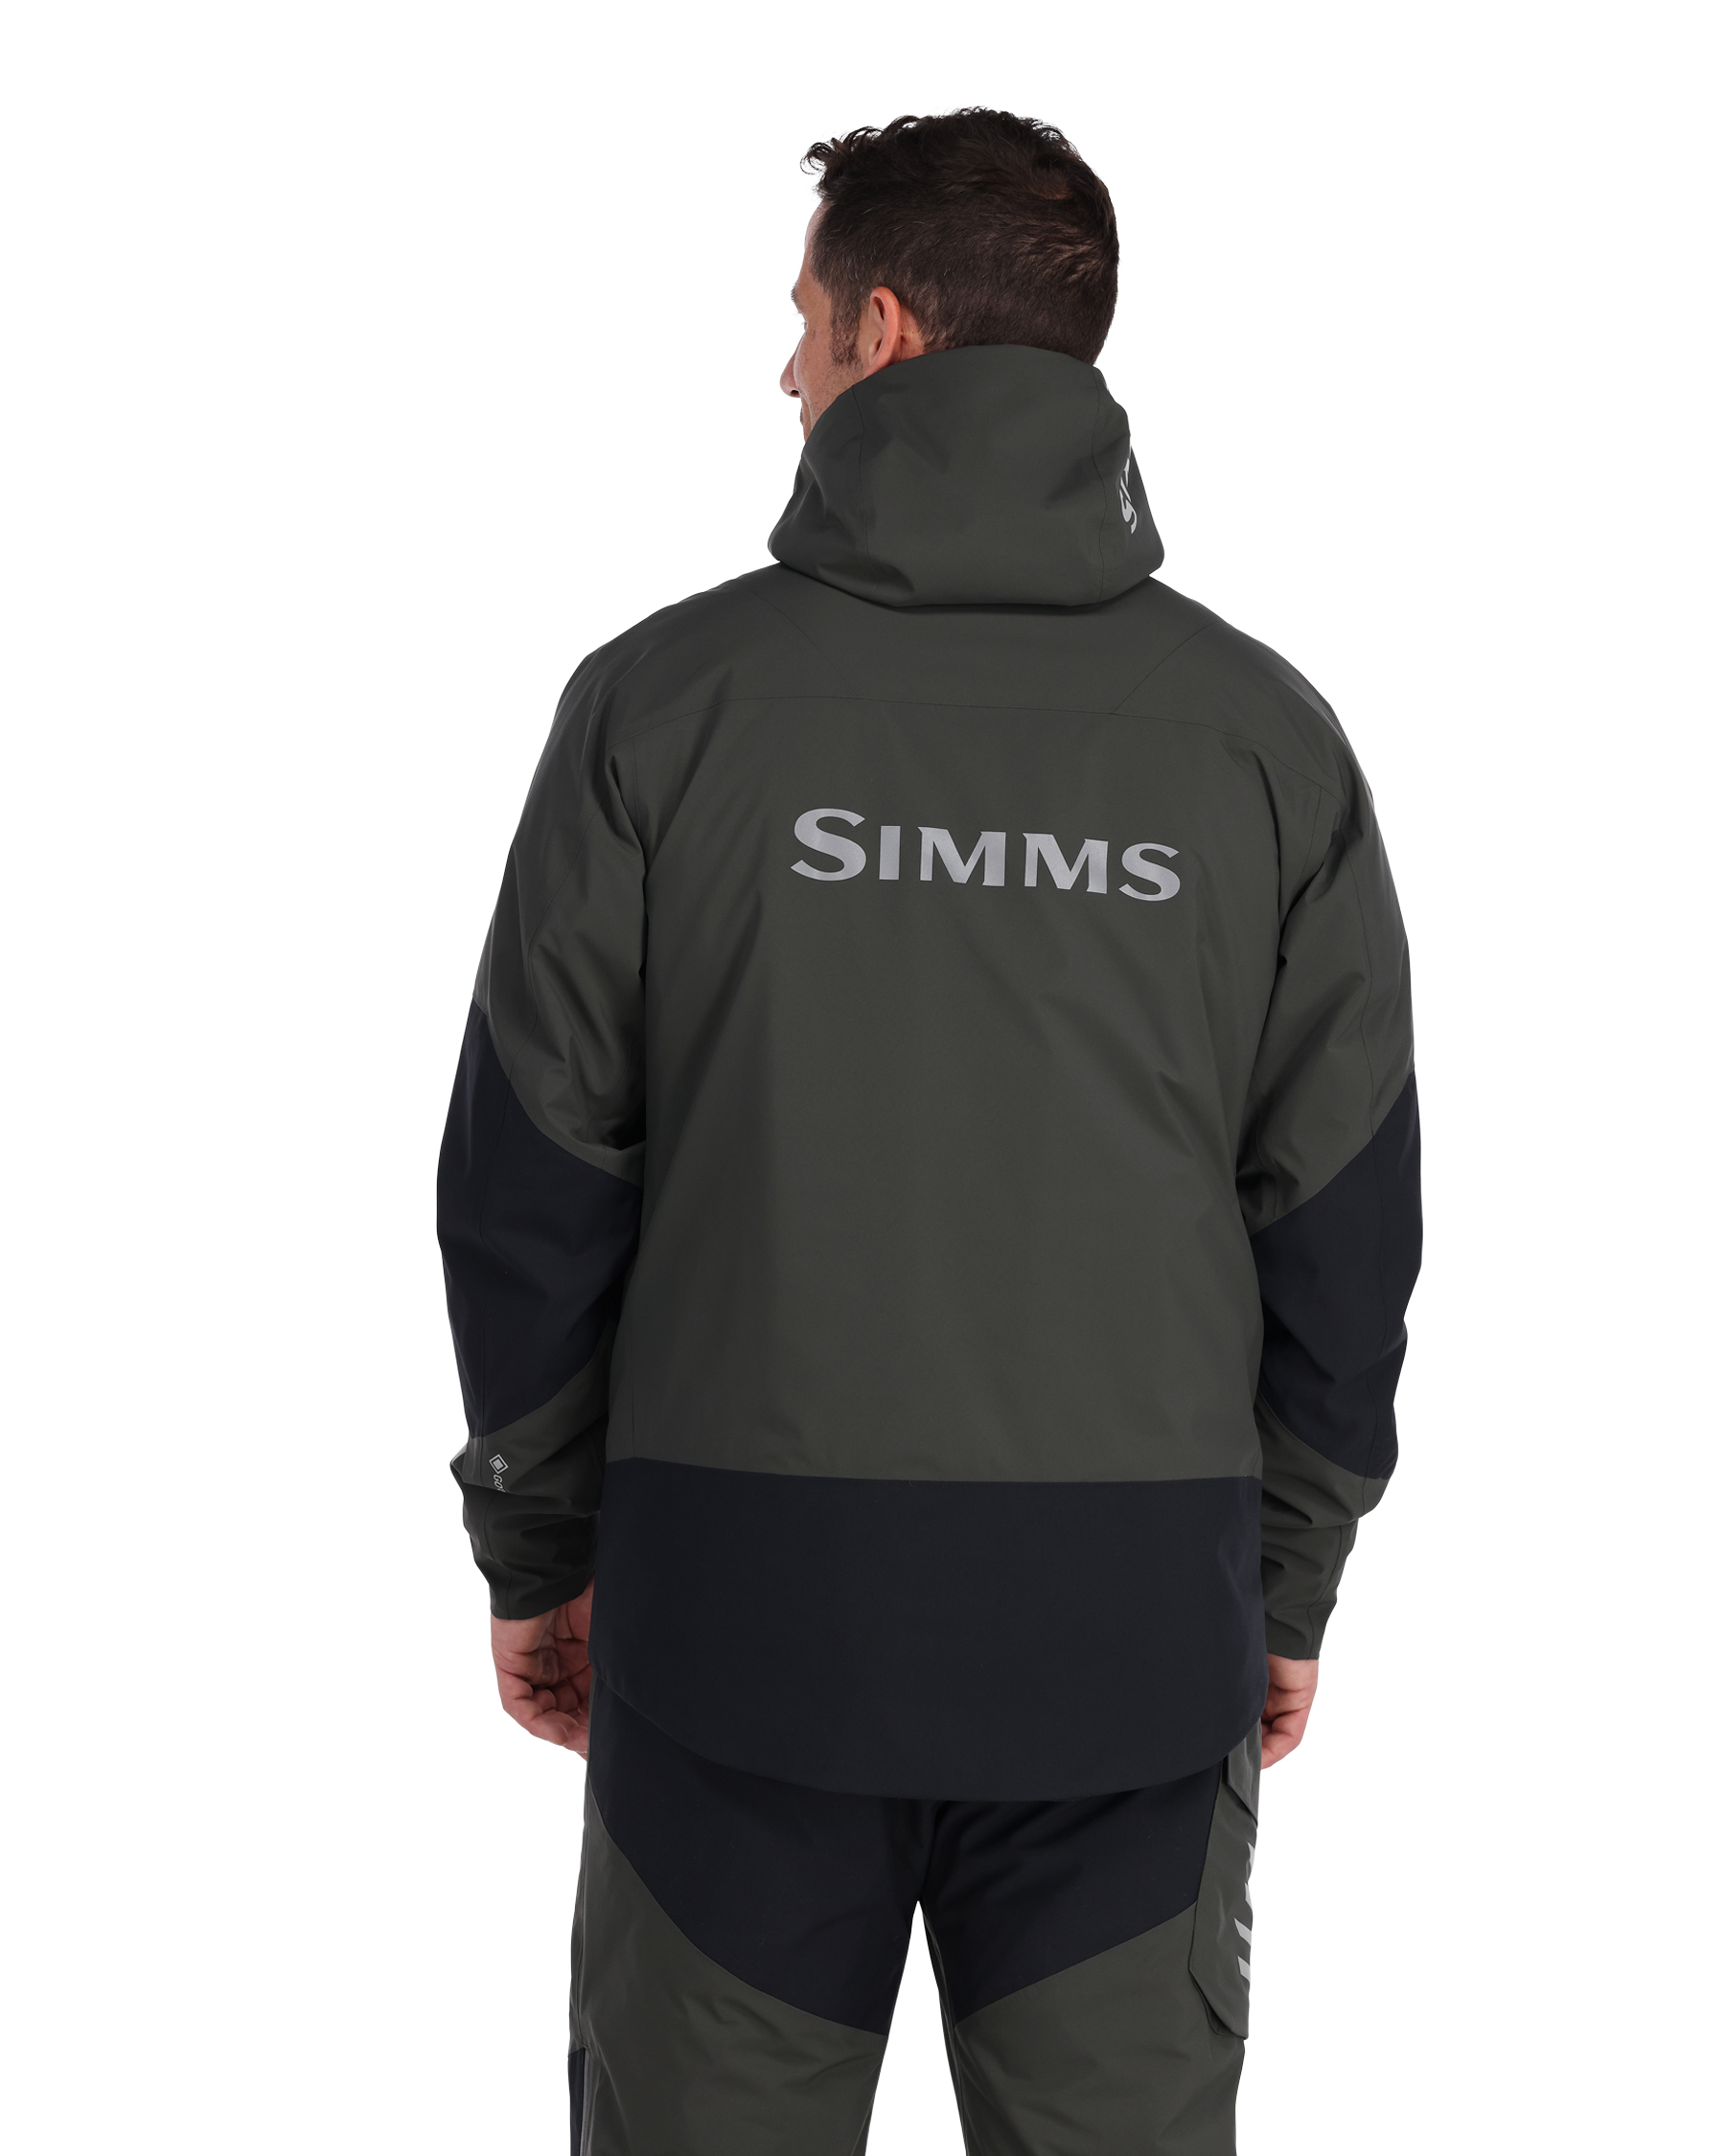 Guide Insulauted Jacket | Simms | マーヴェリック / Maverick